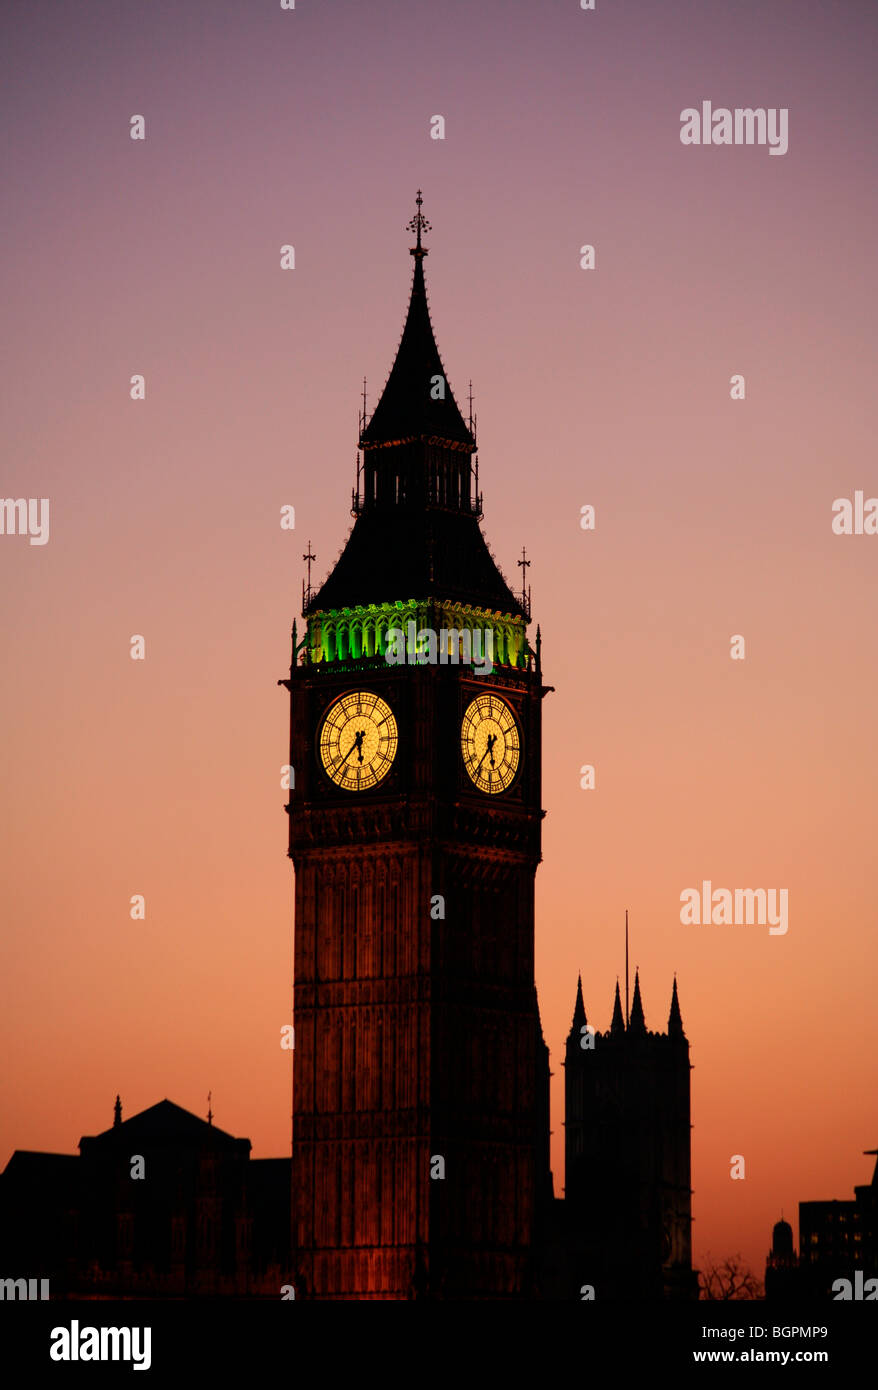 Big Ben Clock bei Nacht Häuser des Parlaments Nordufer River Thames Westminster London City England UK Stockfoto